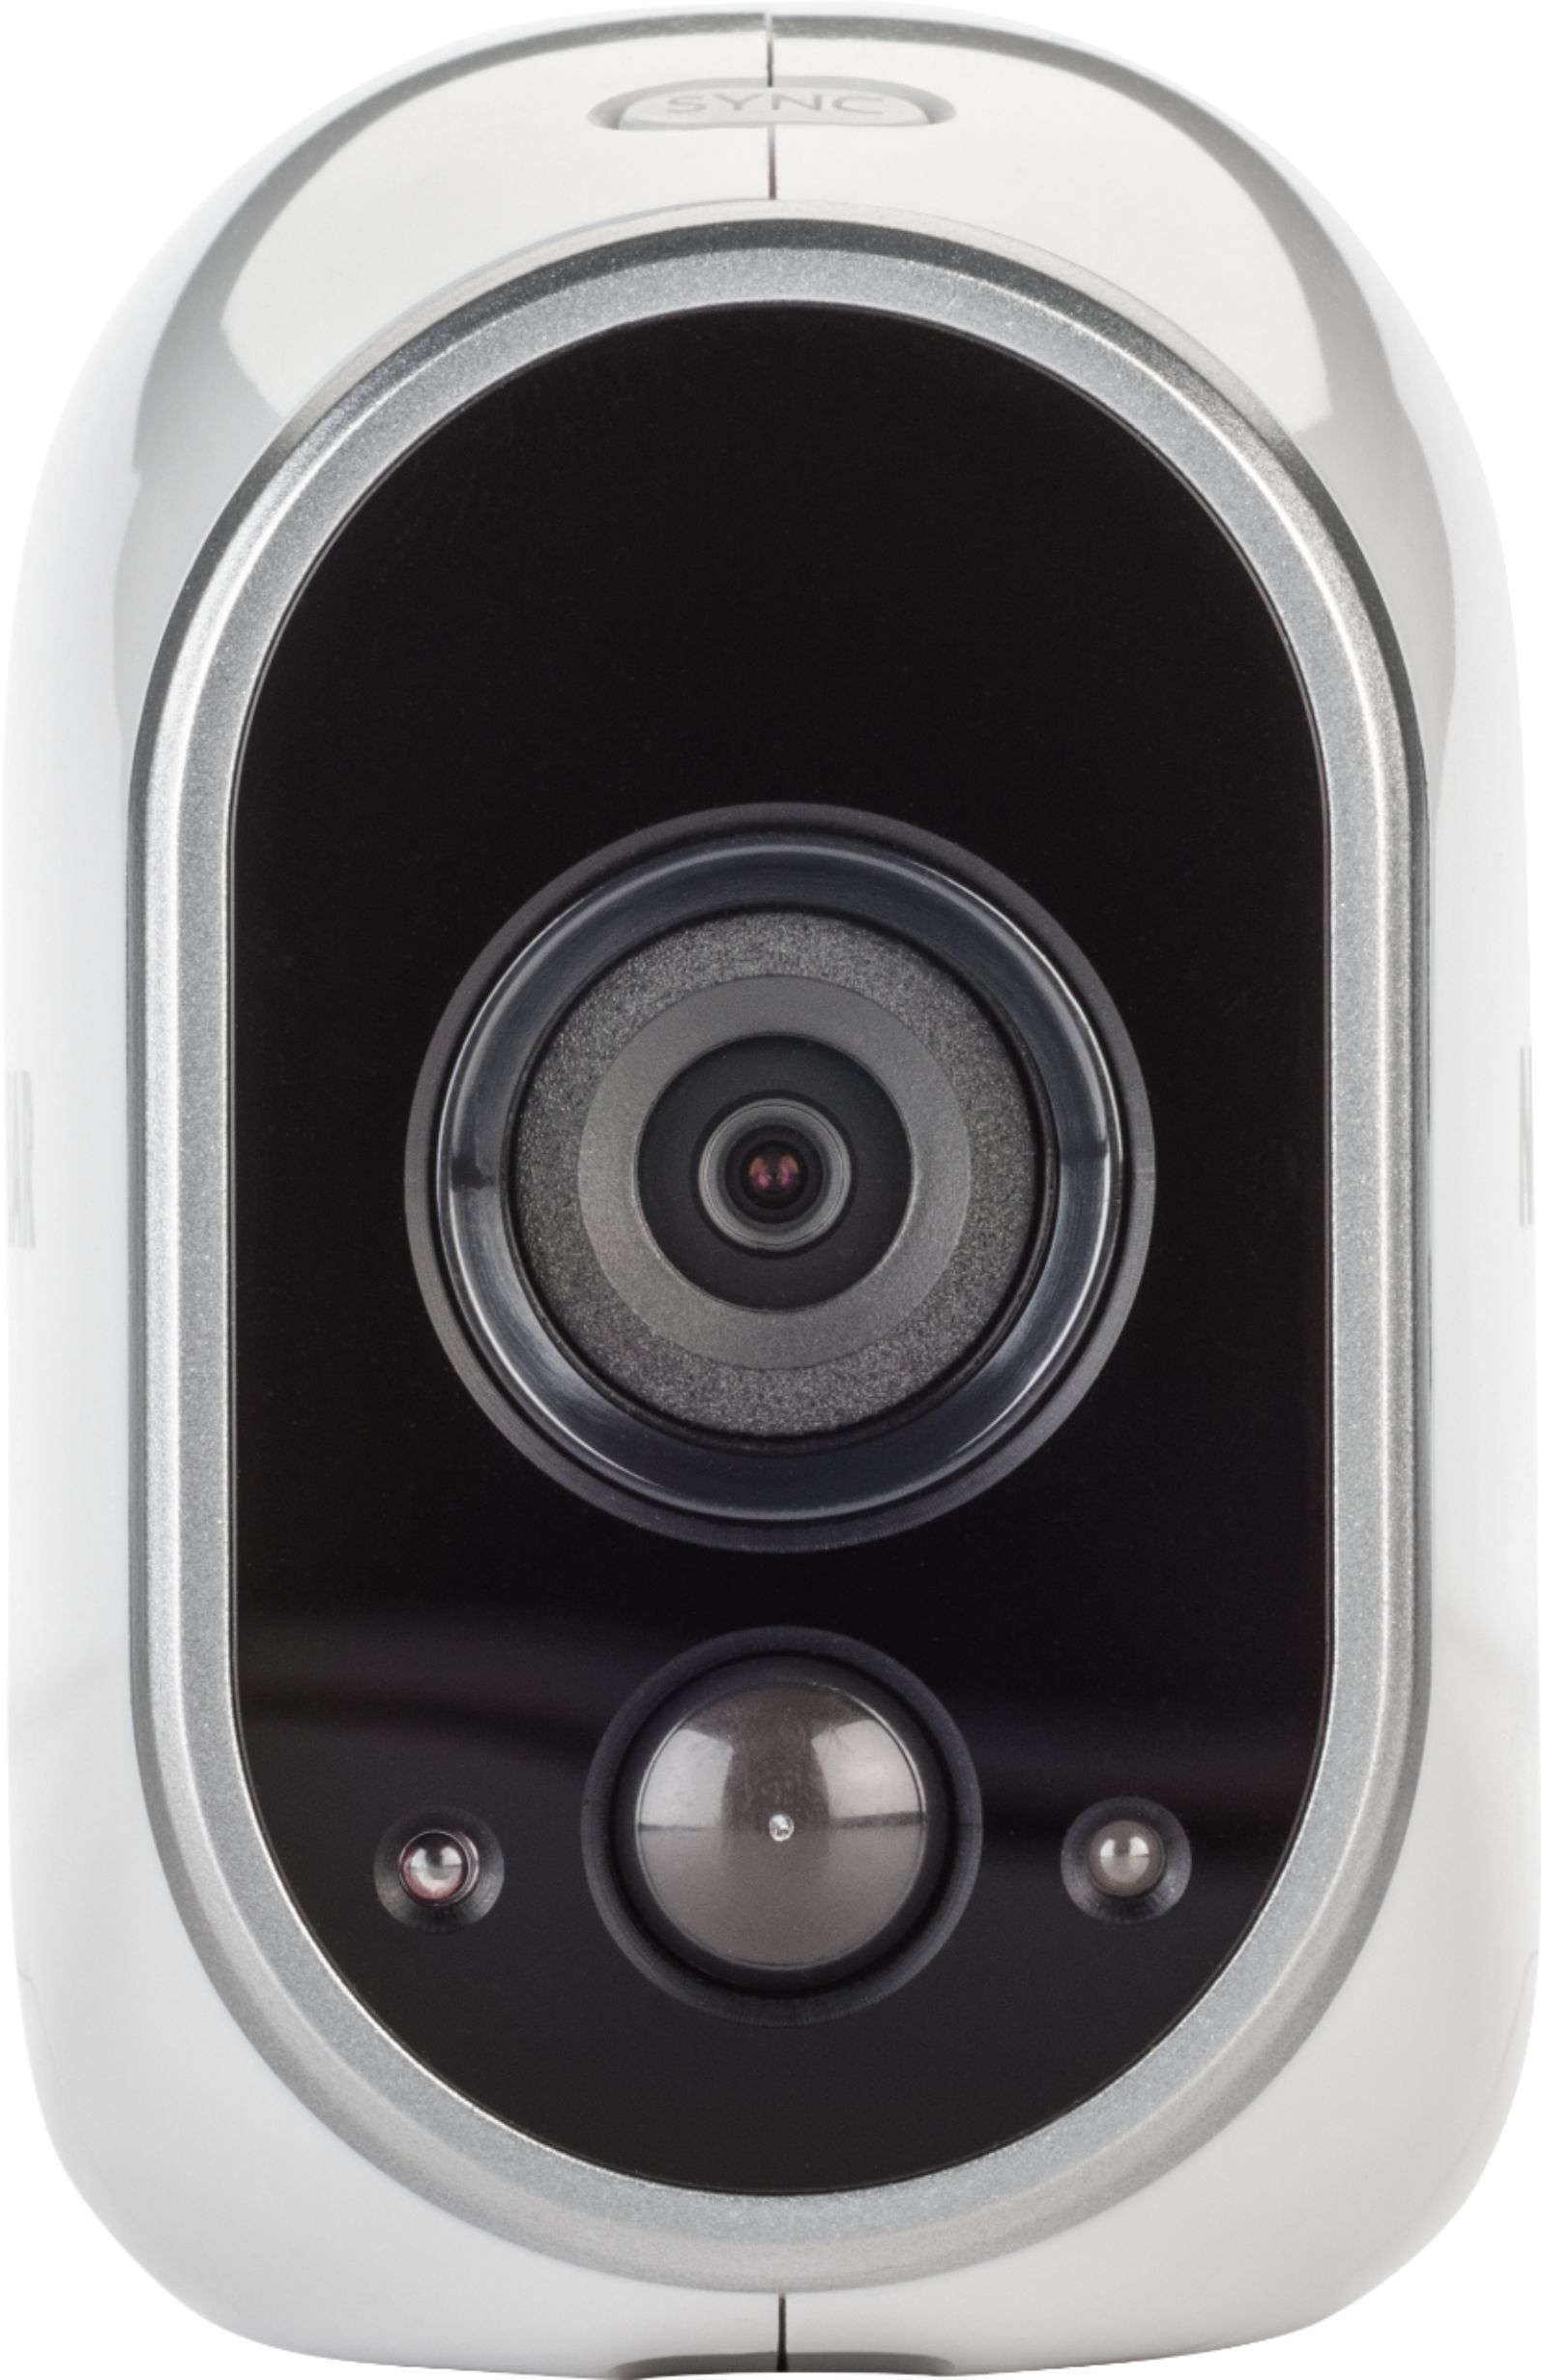 Shop > NETGEAR Arlo Pro 2 Wireless Home Security Camera - HighTechDad™